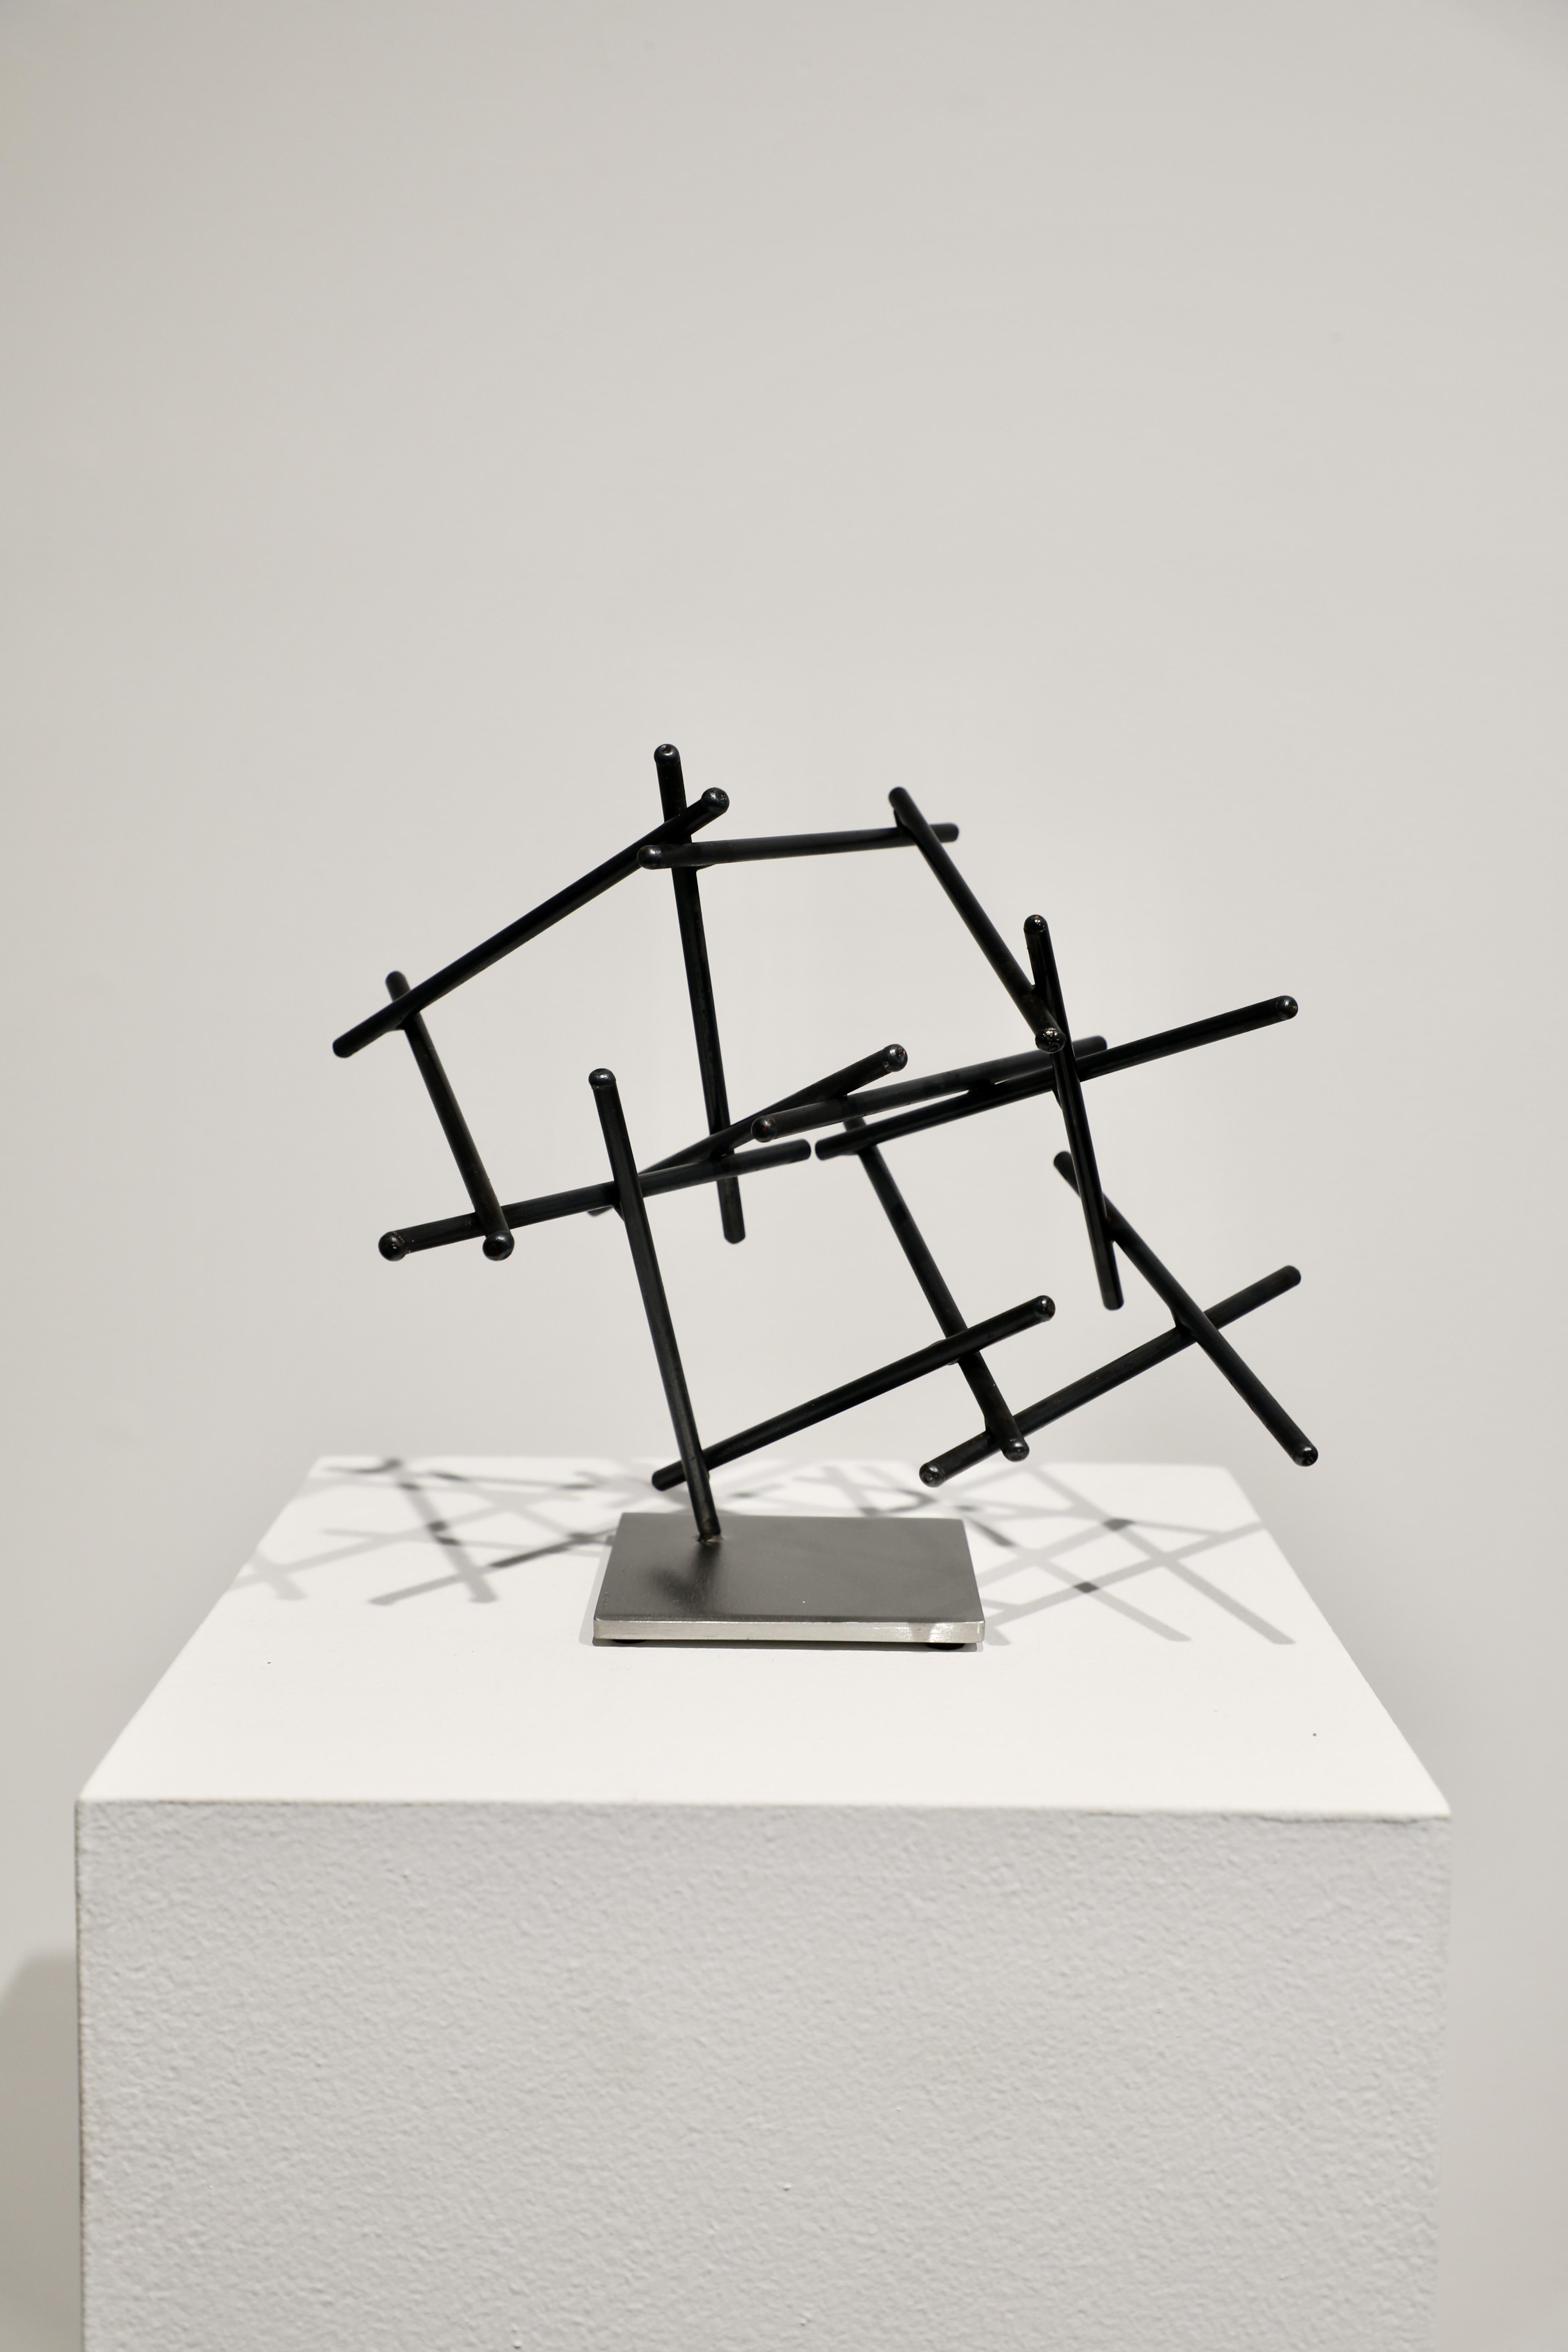 Matt Devine Abstract Sculpture - Studio Study 22-12